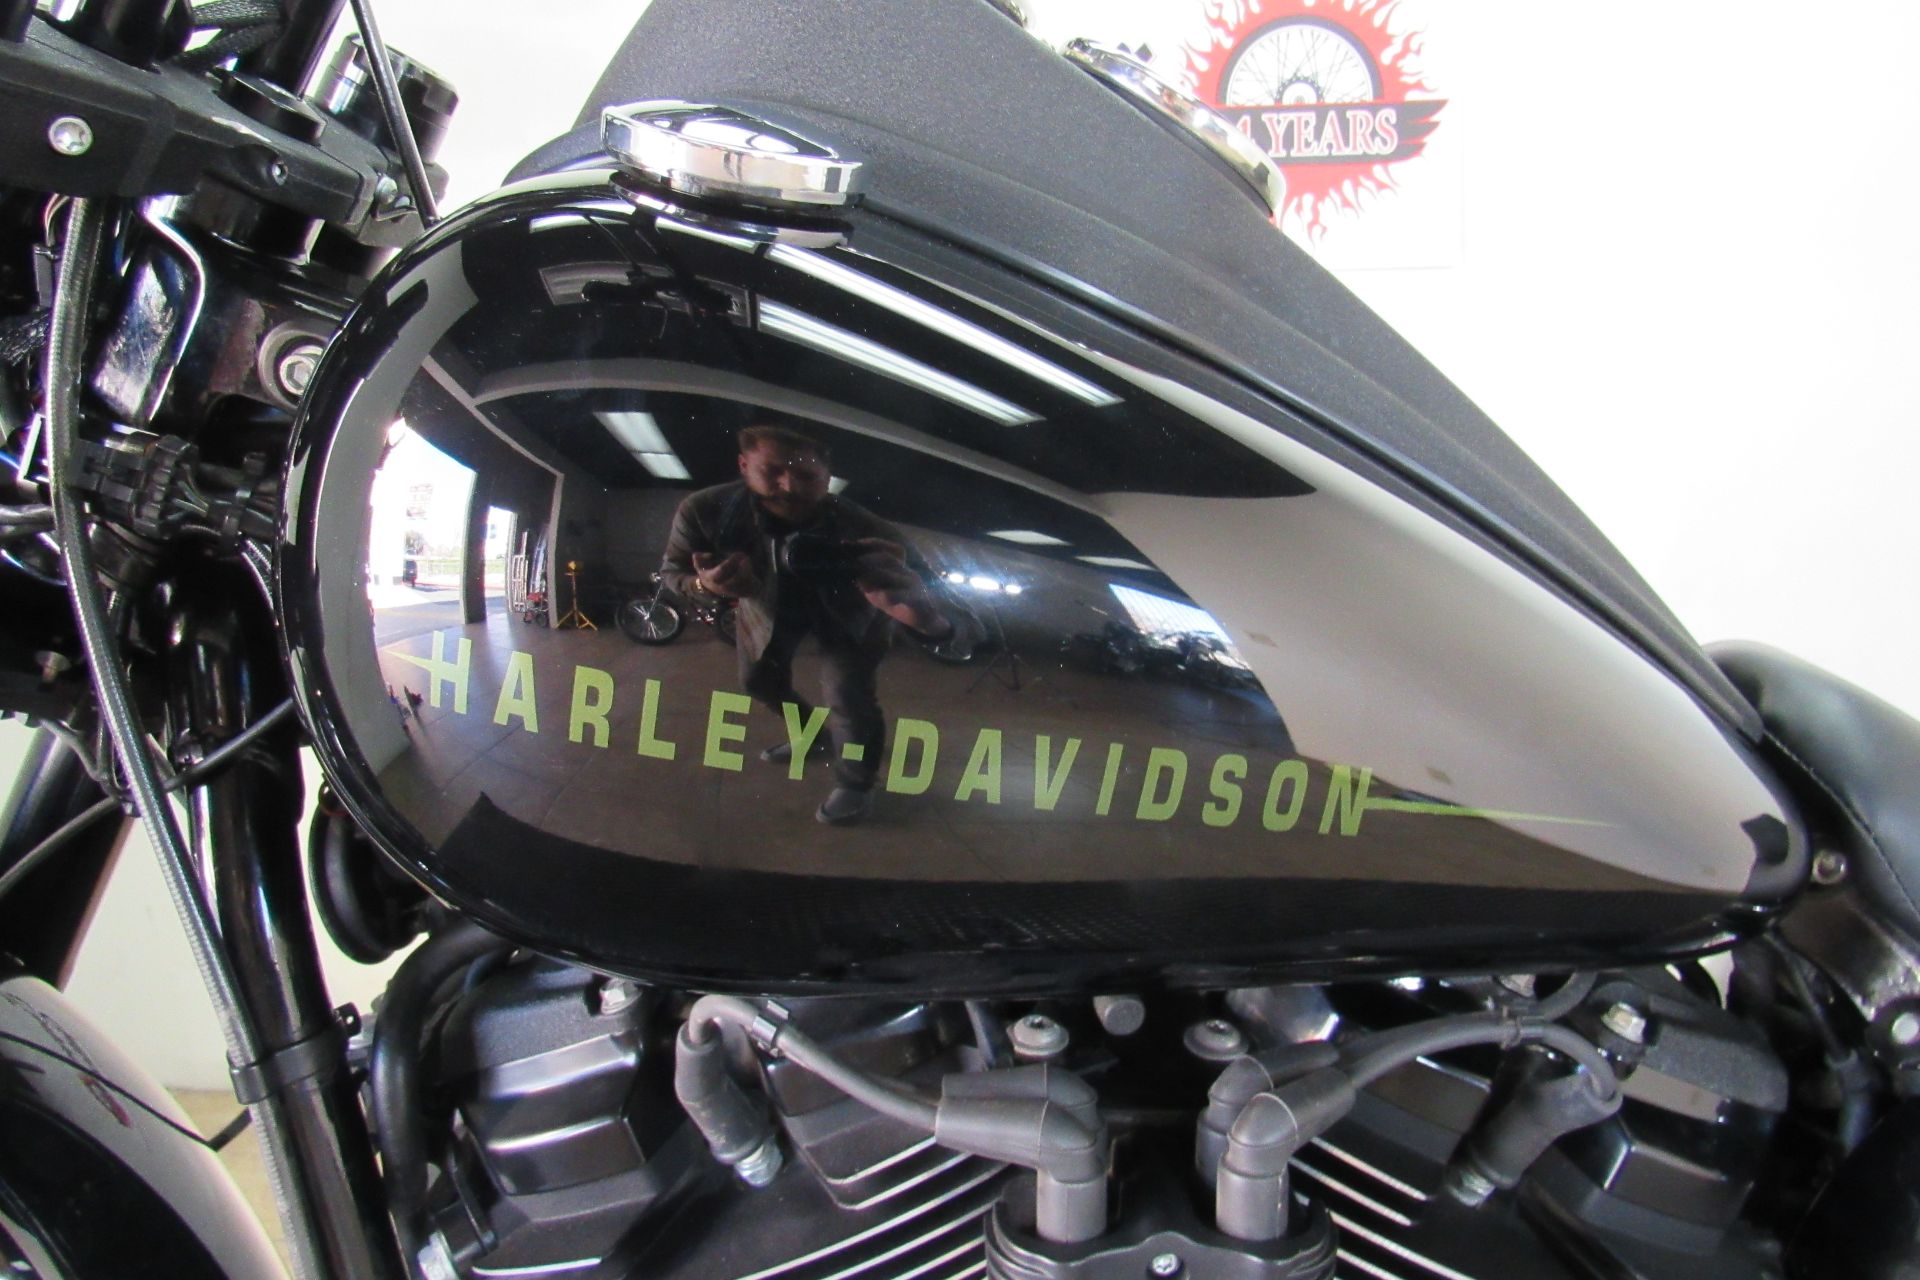 2020 Harley-Davidson Low Rider®S in Temecula, California - Photo 8